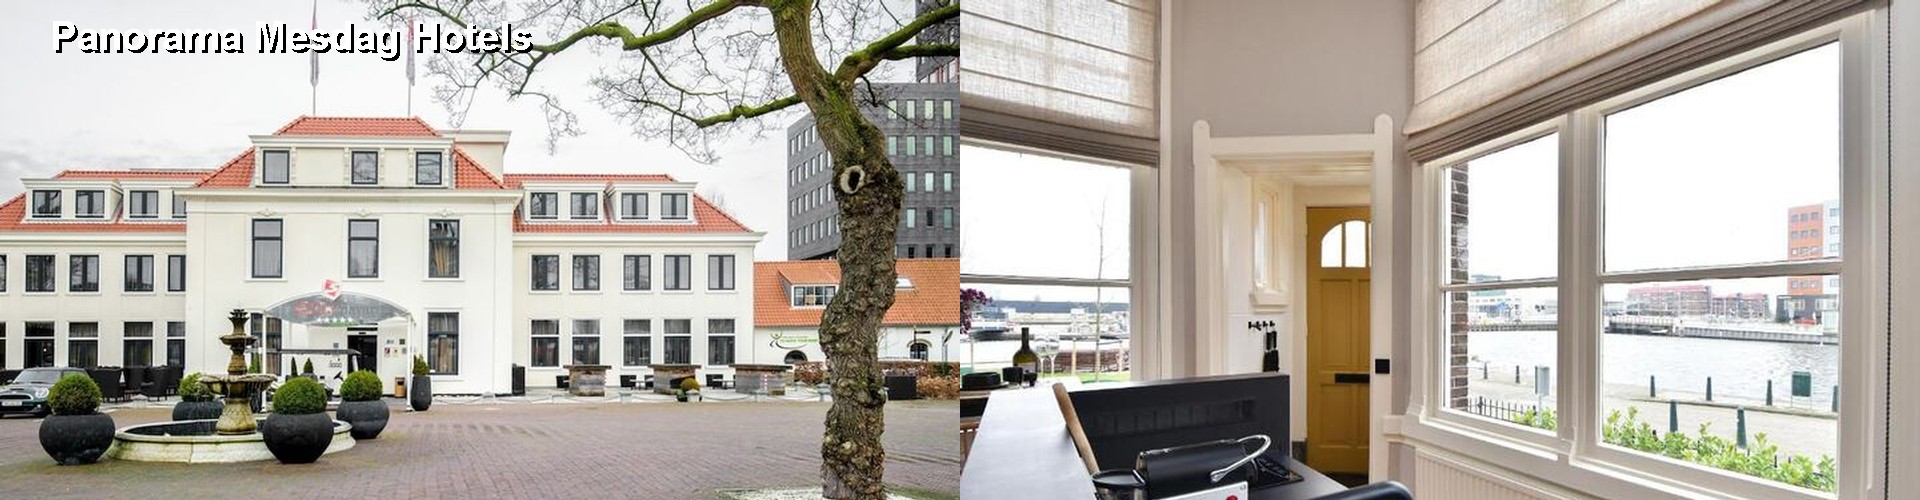 5 Best Hotels near Panorama Mesdag